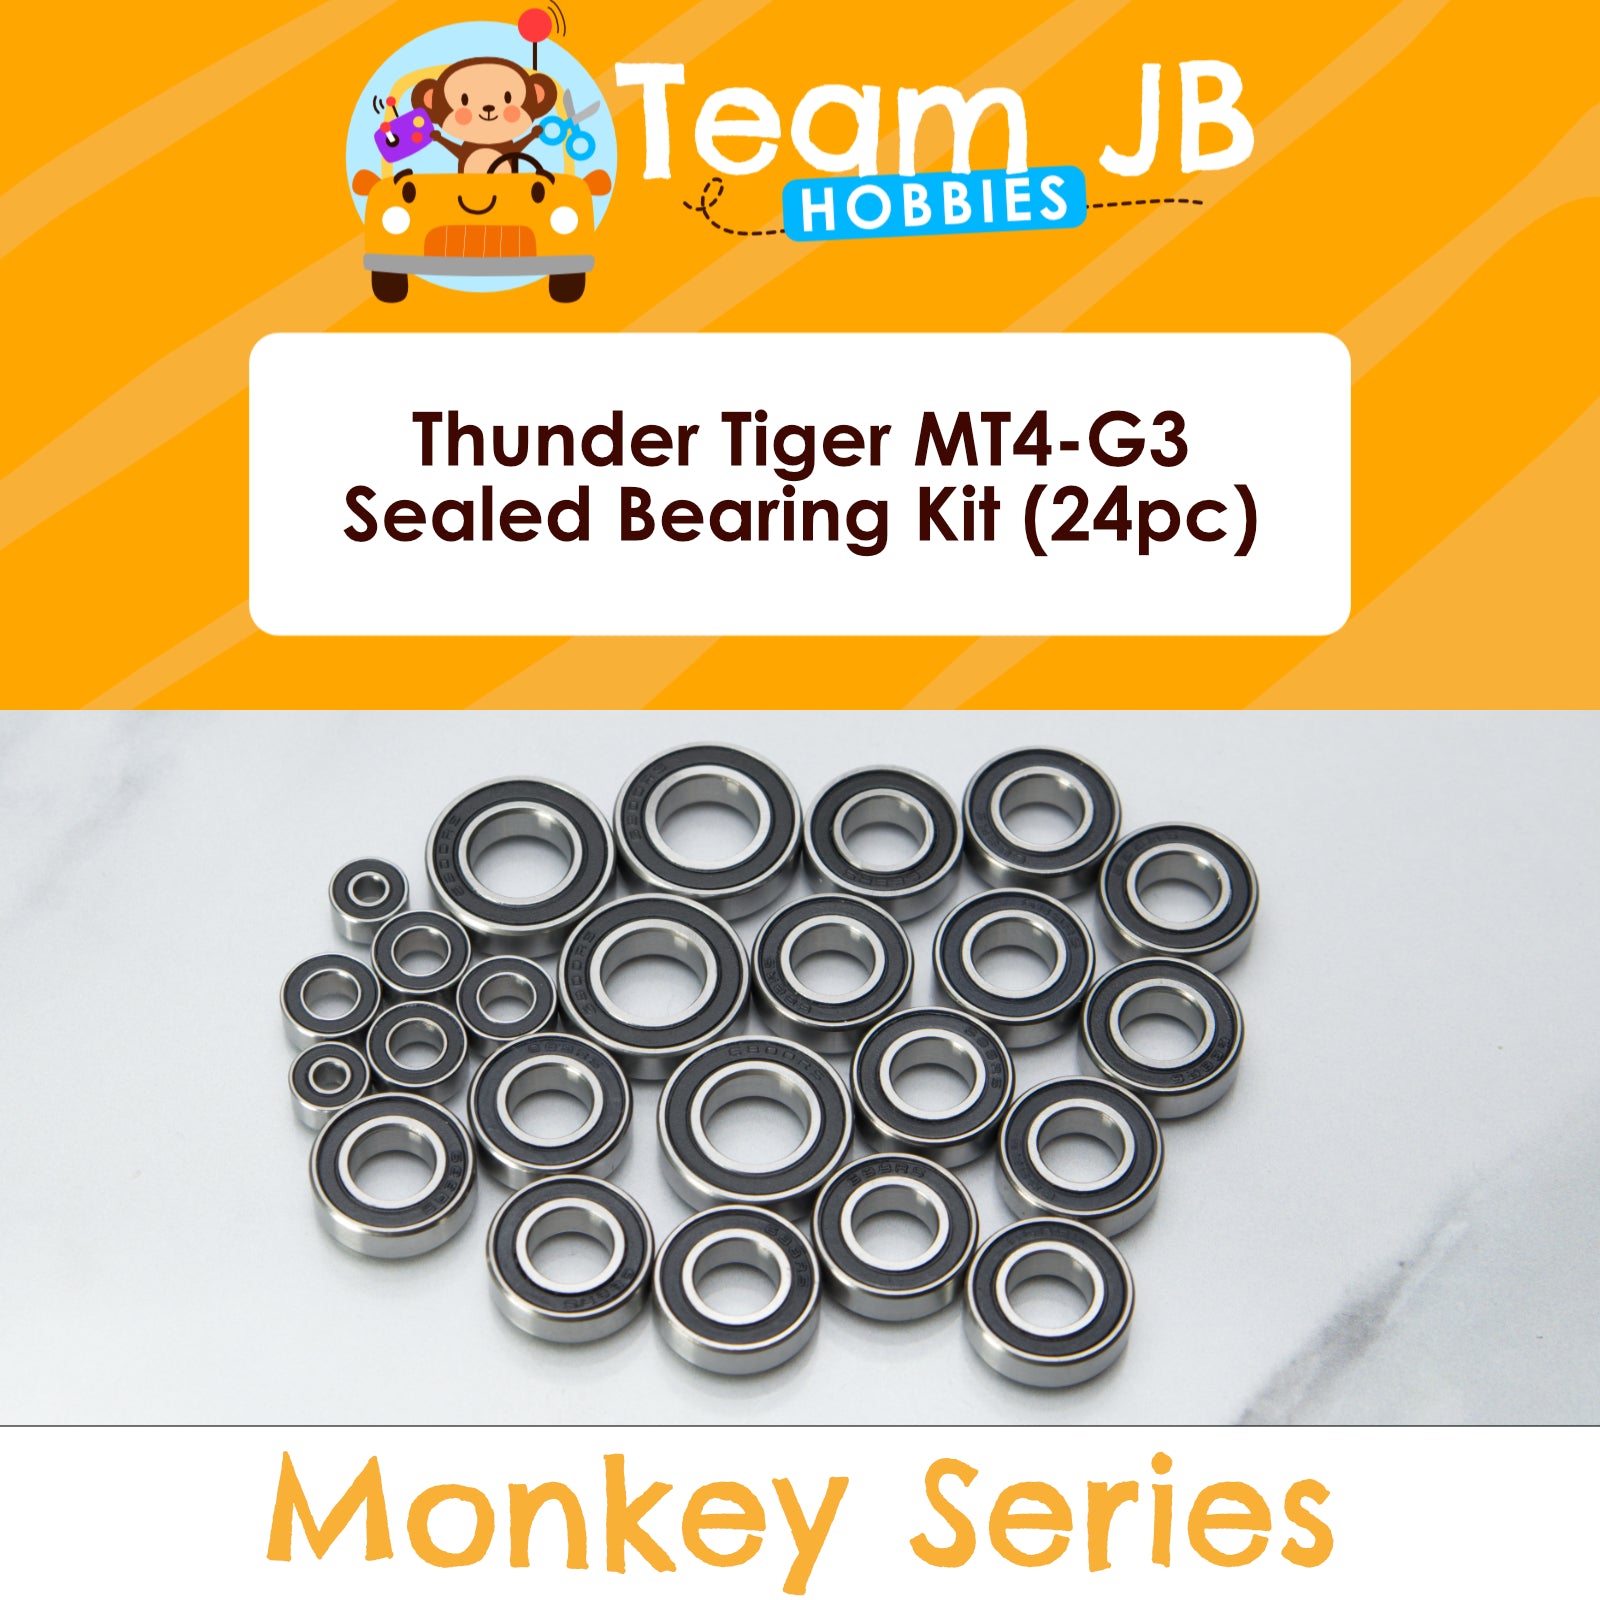 Thunder Tiger MT4-G3 - Sealed Bearing Kit